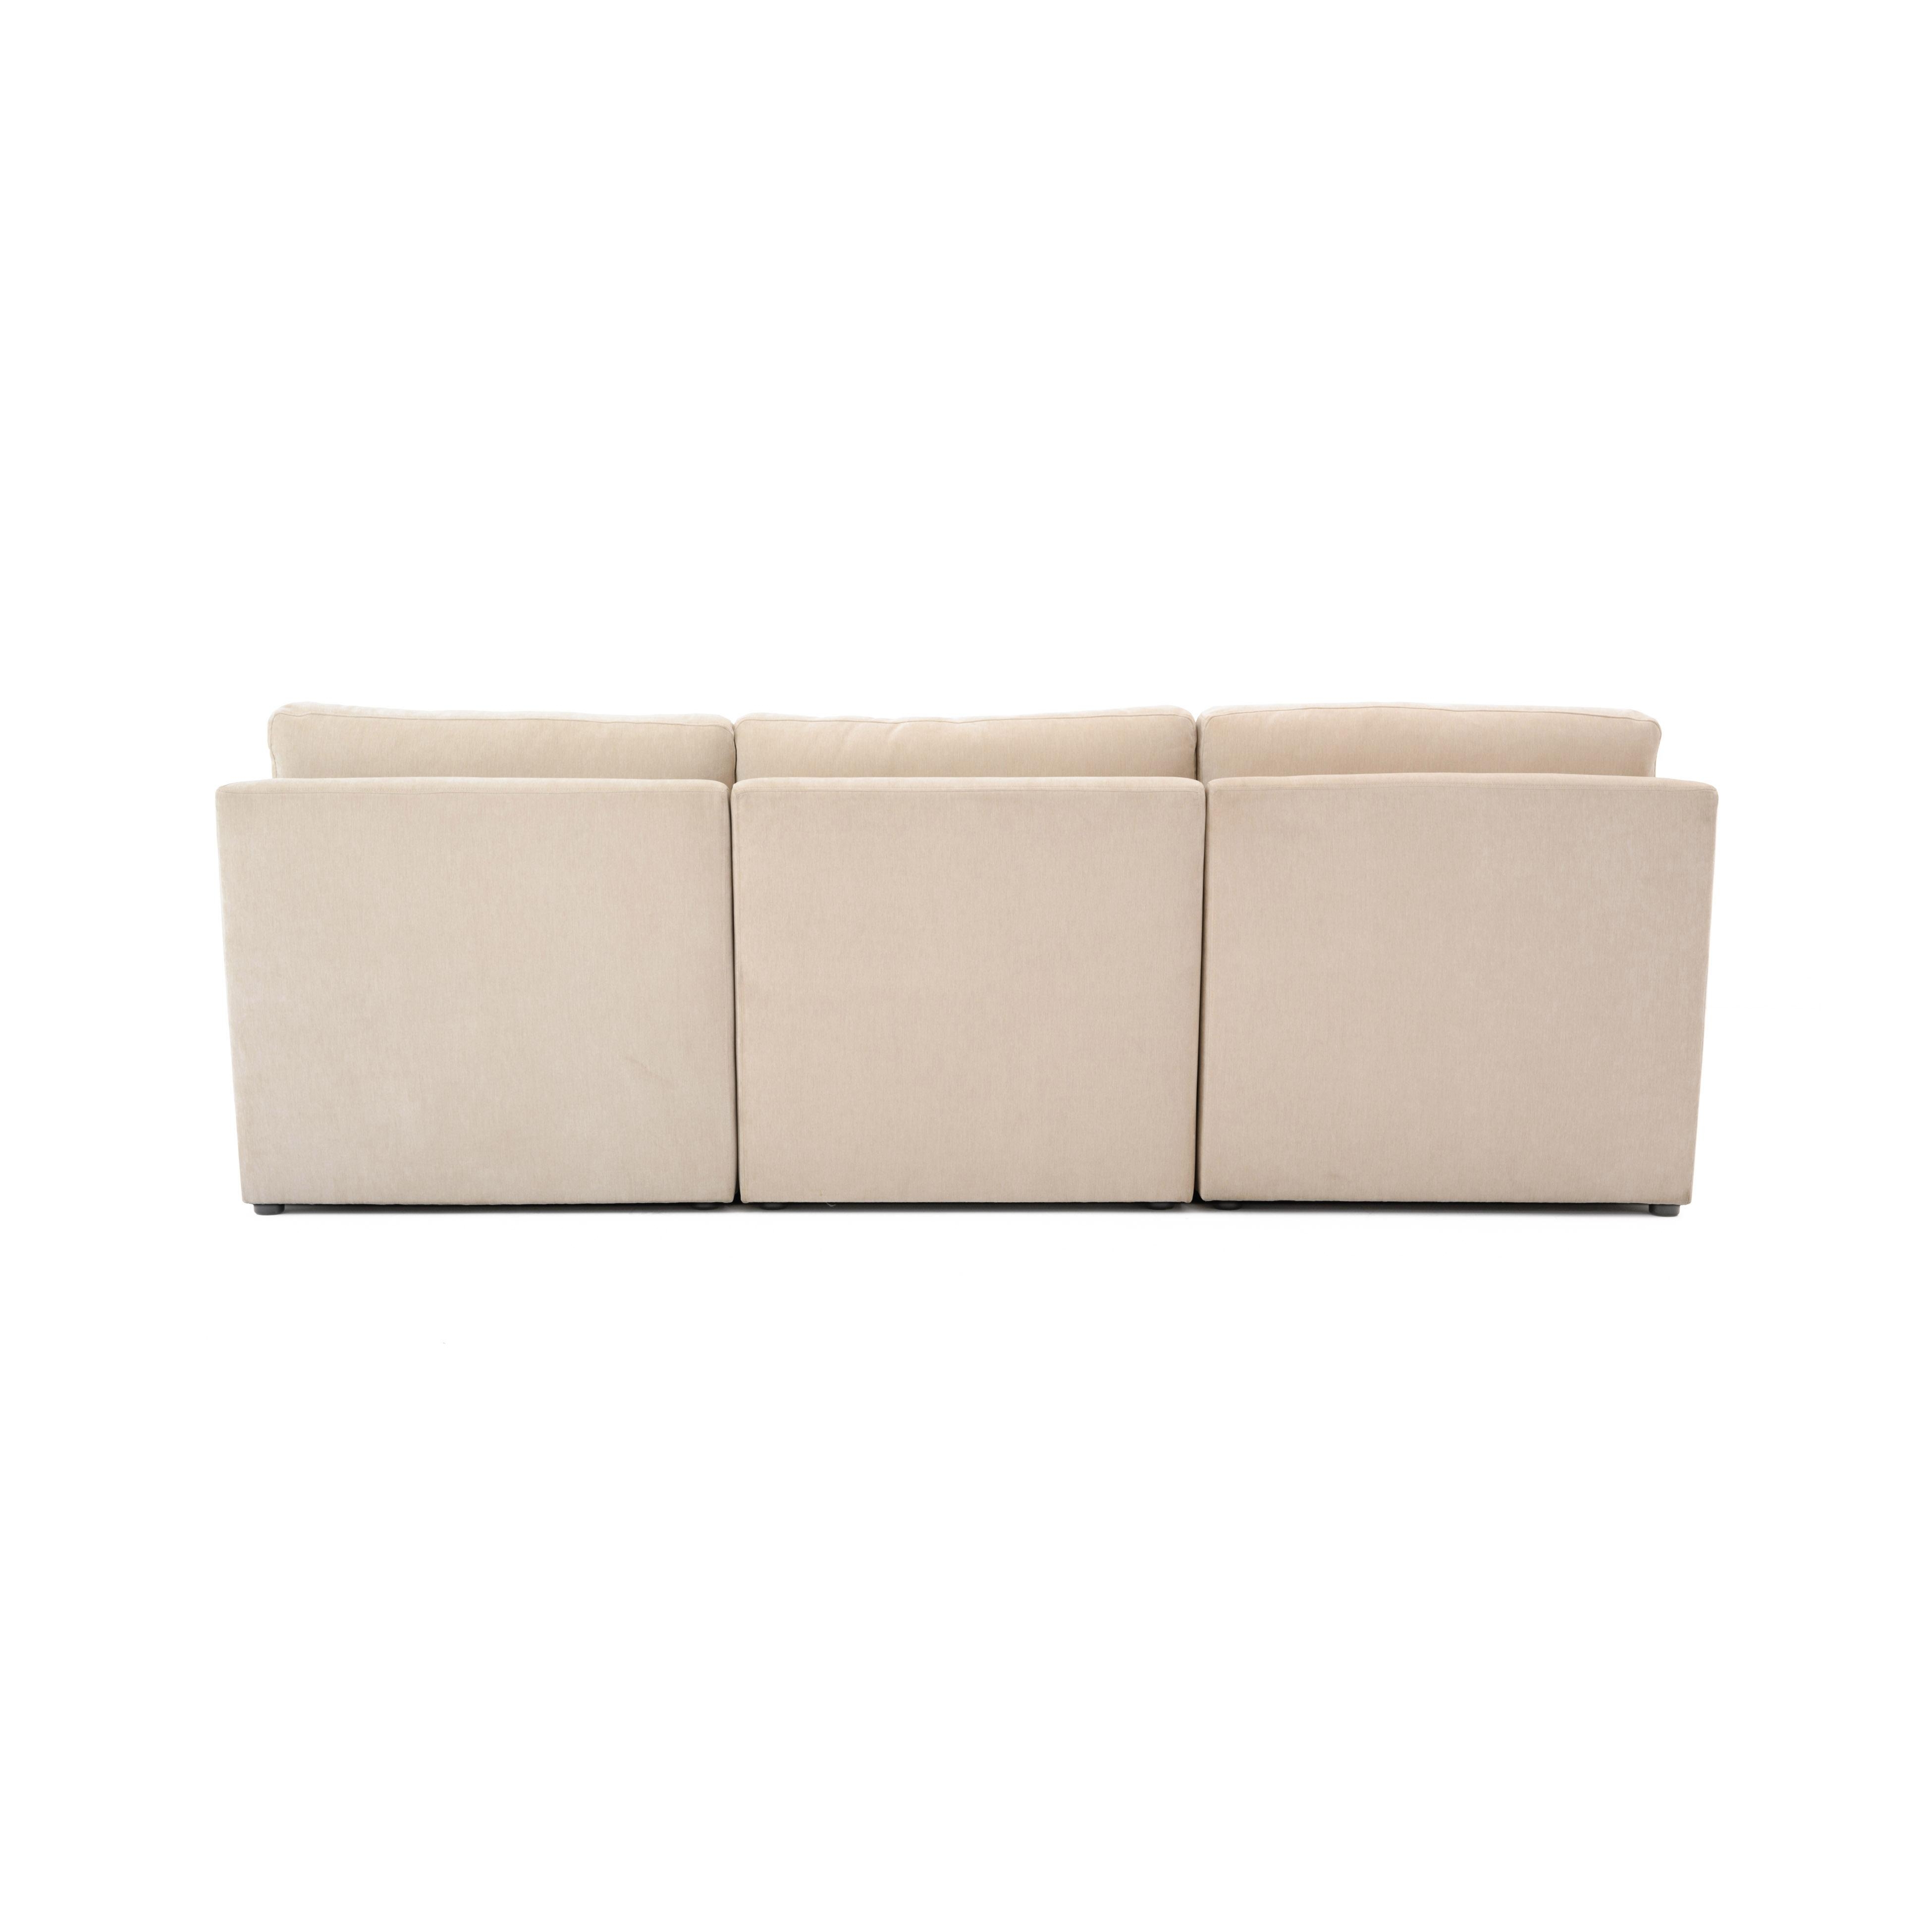 Aiden Beige Modular Sofa - Image 2